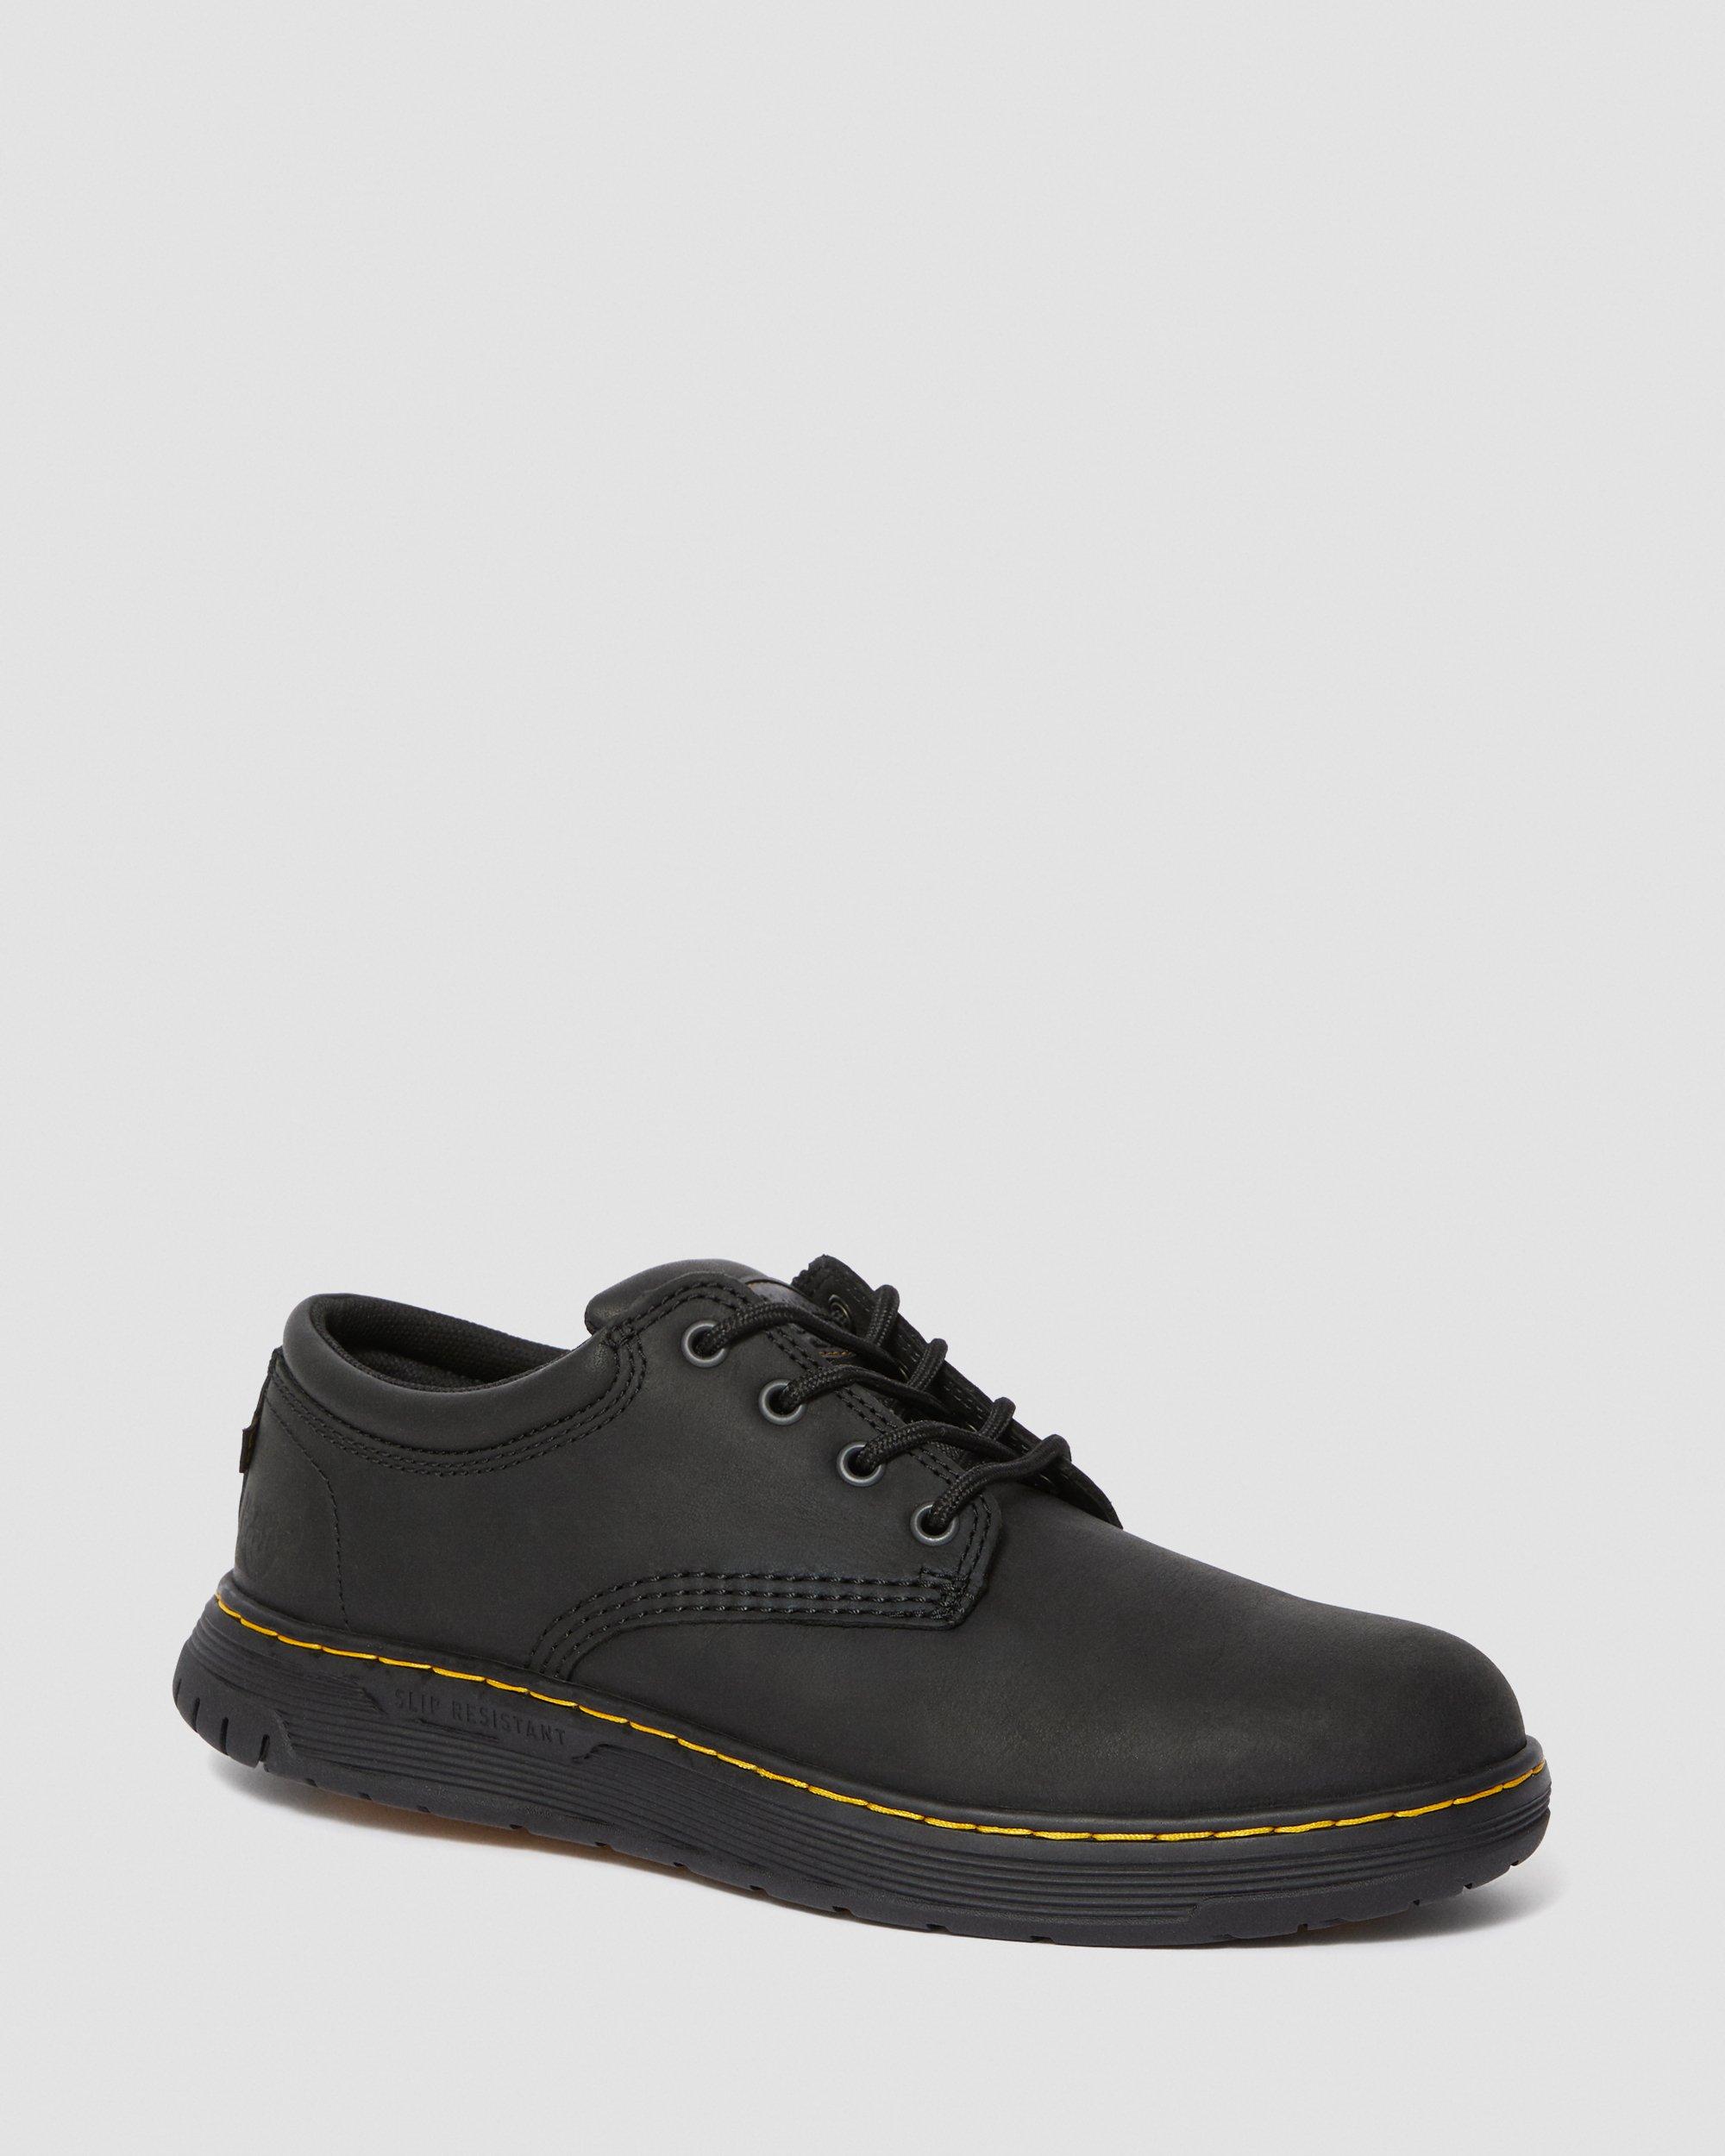 Culvert Slip Resistant Leather Work Shoes in Black